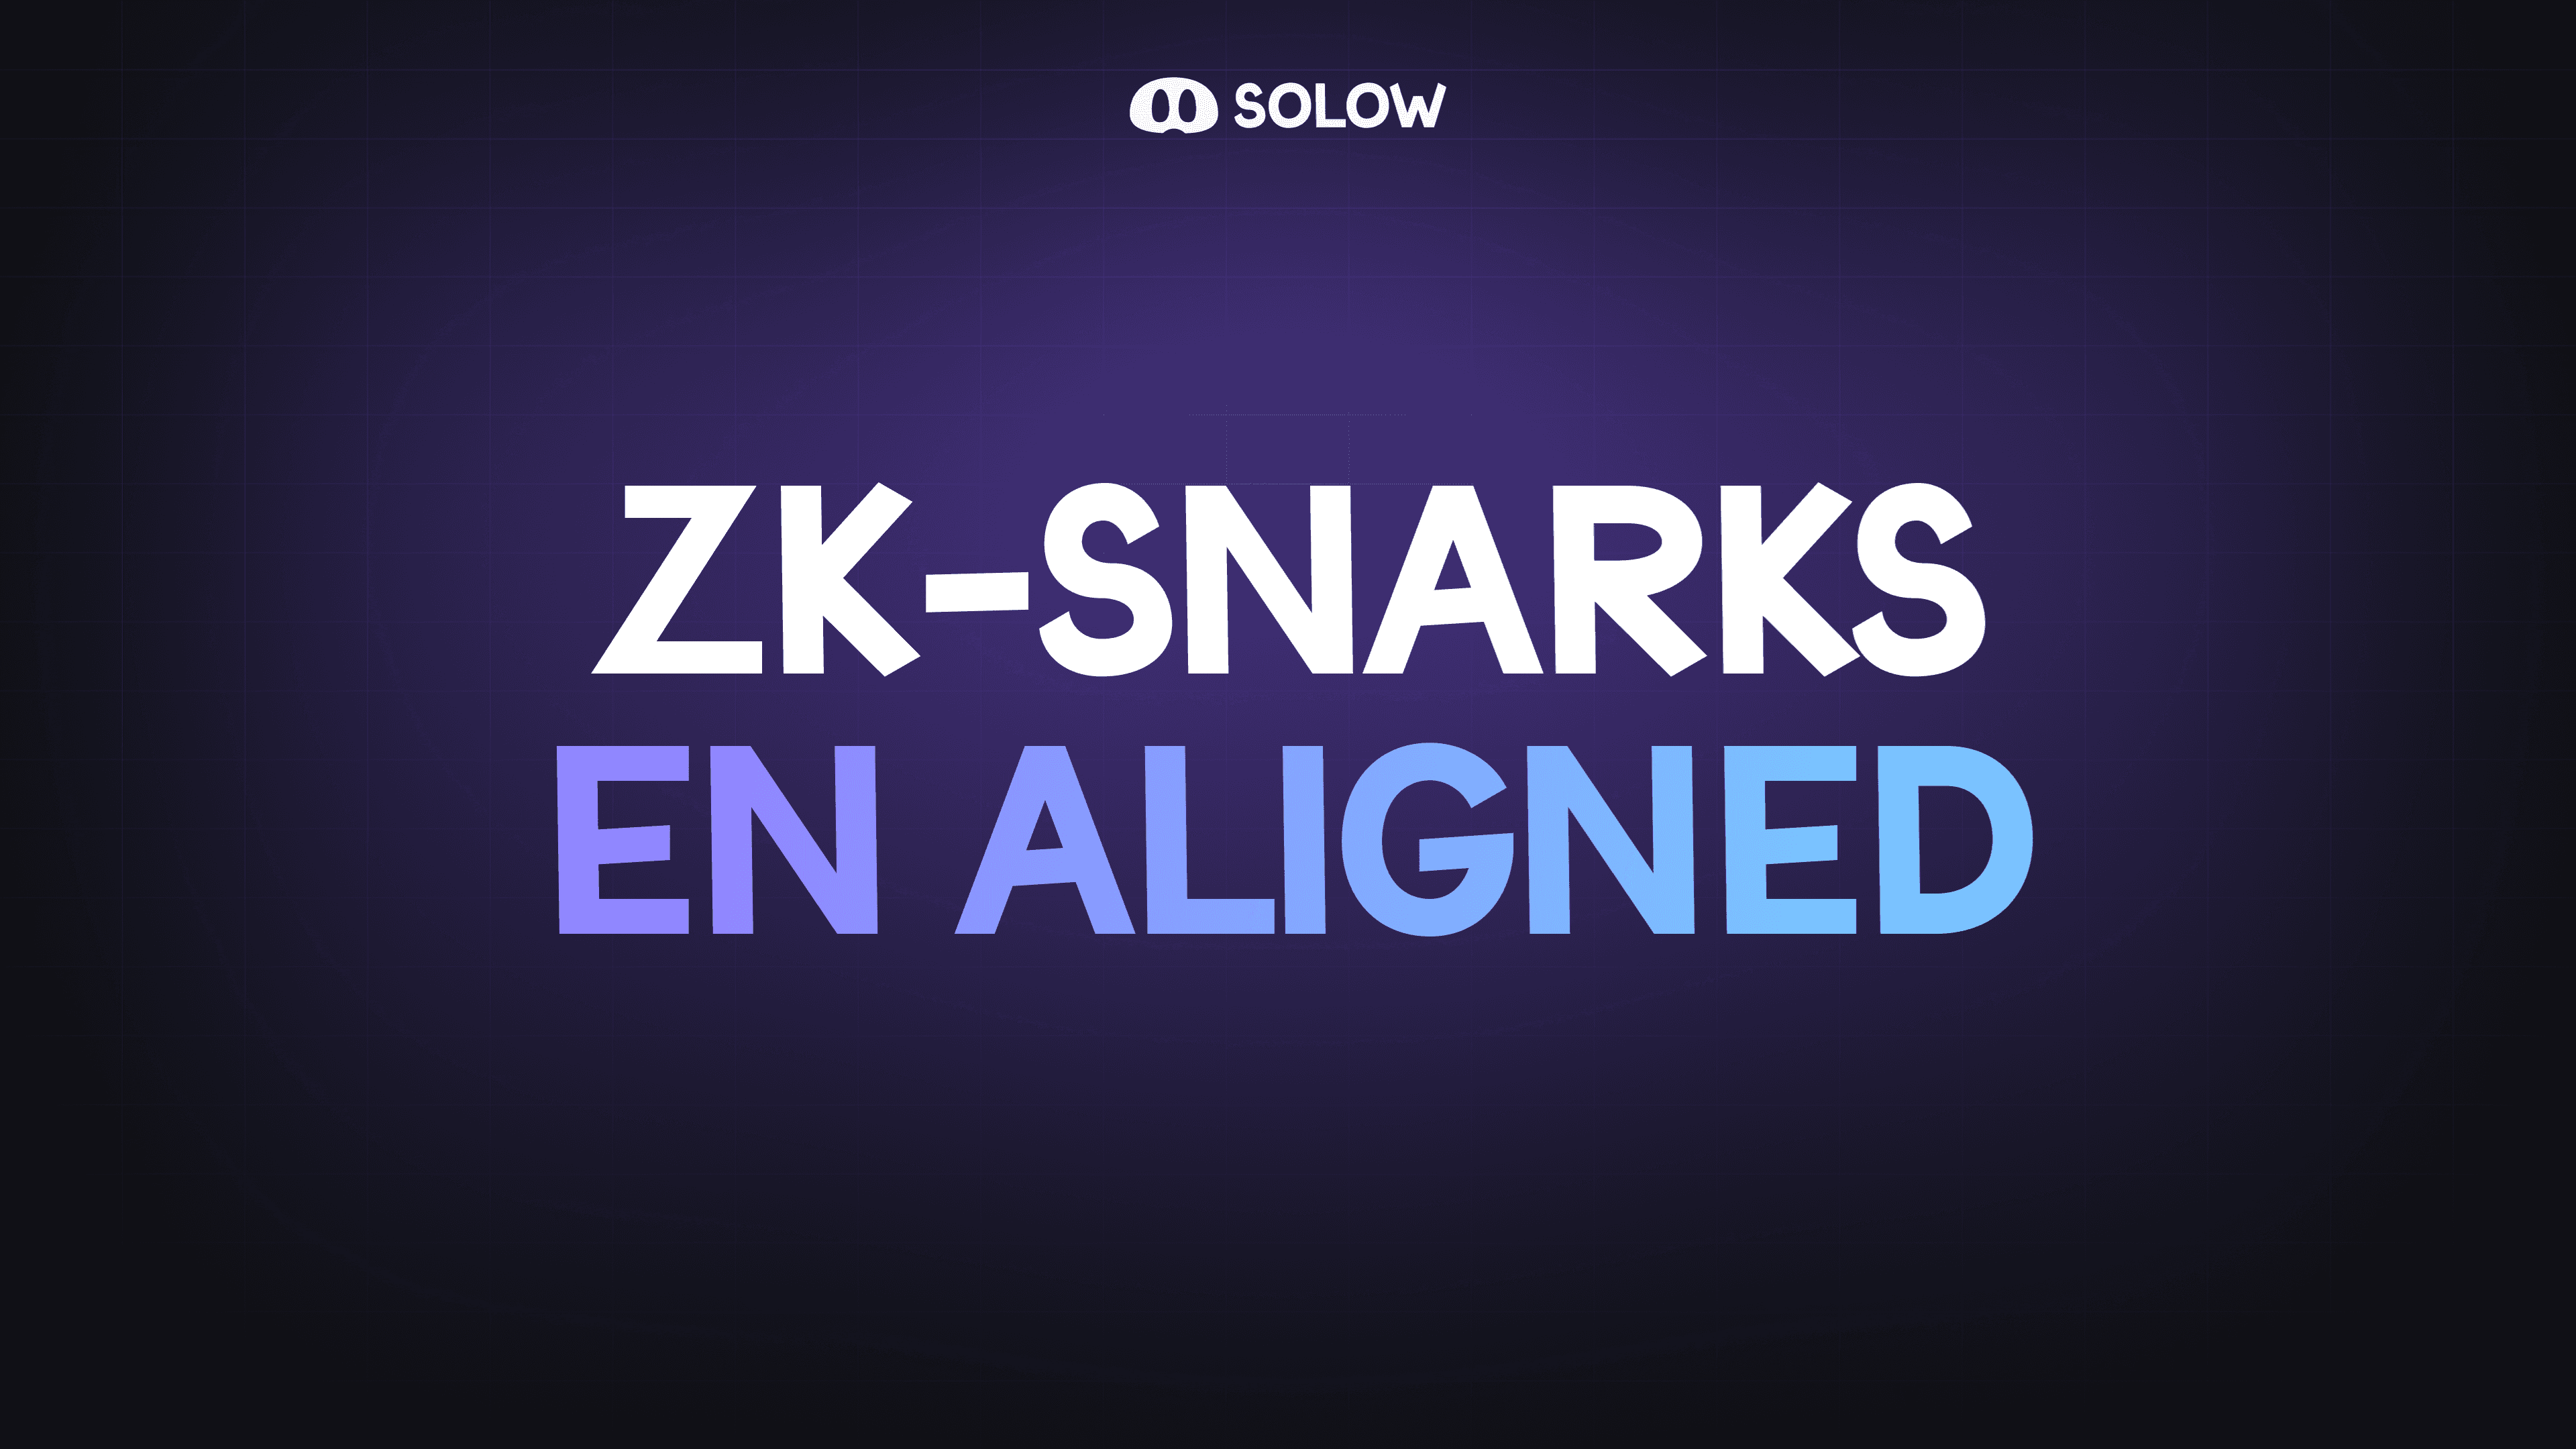 ¿Qué son ZK-SNARKs?